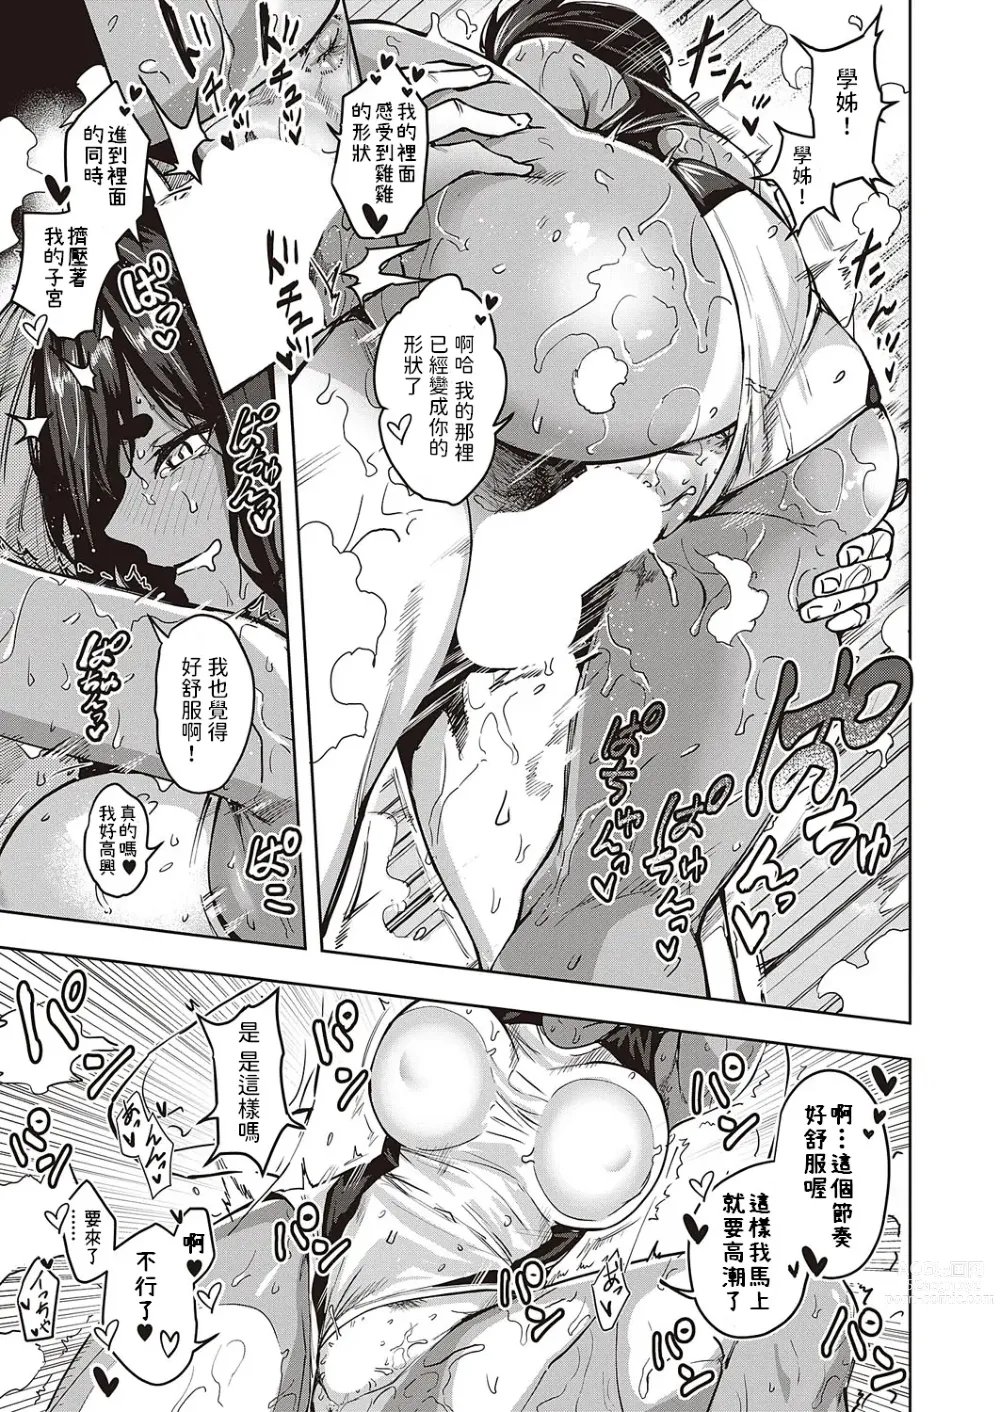 Page 19 of manga Wai Mimimimi Mizuhara desu